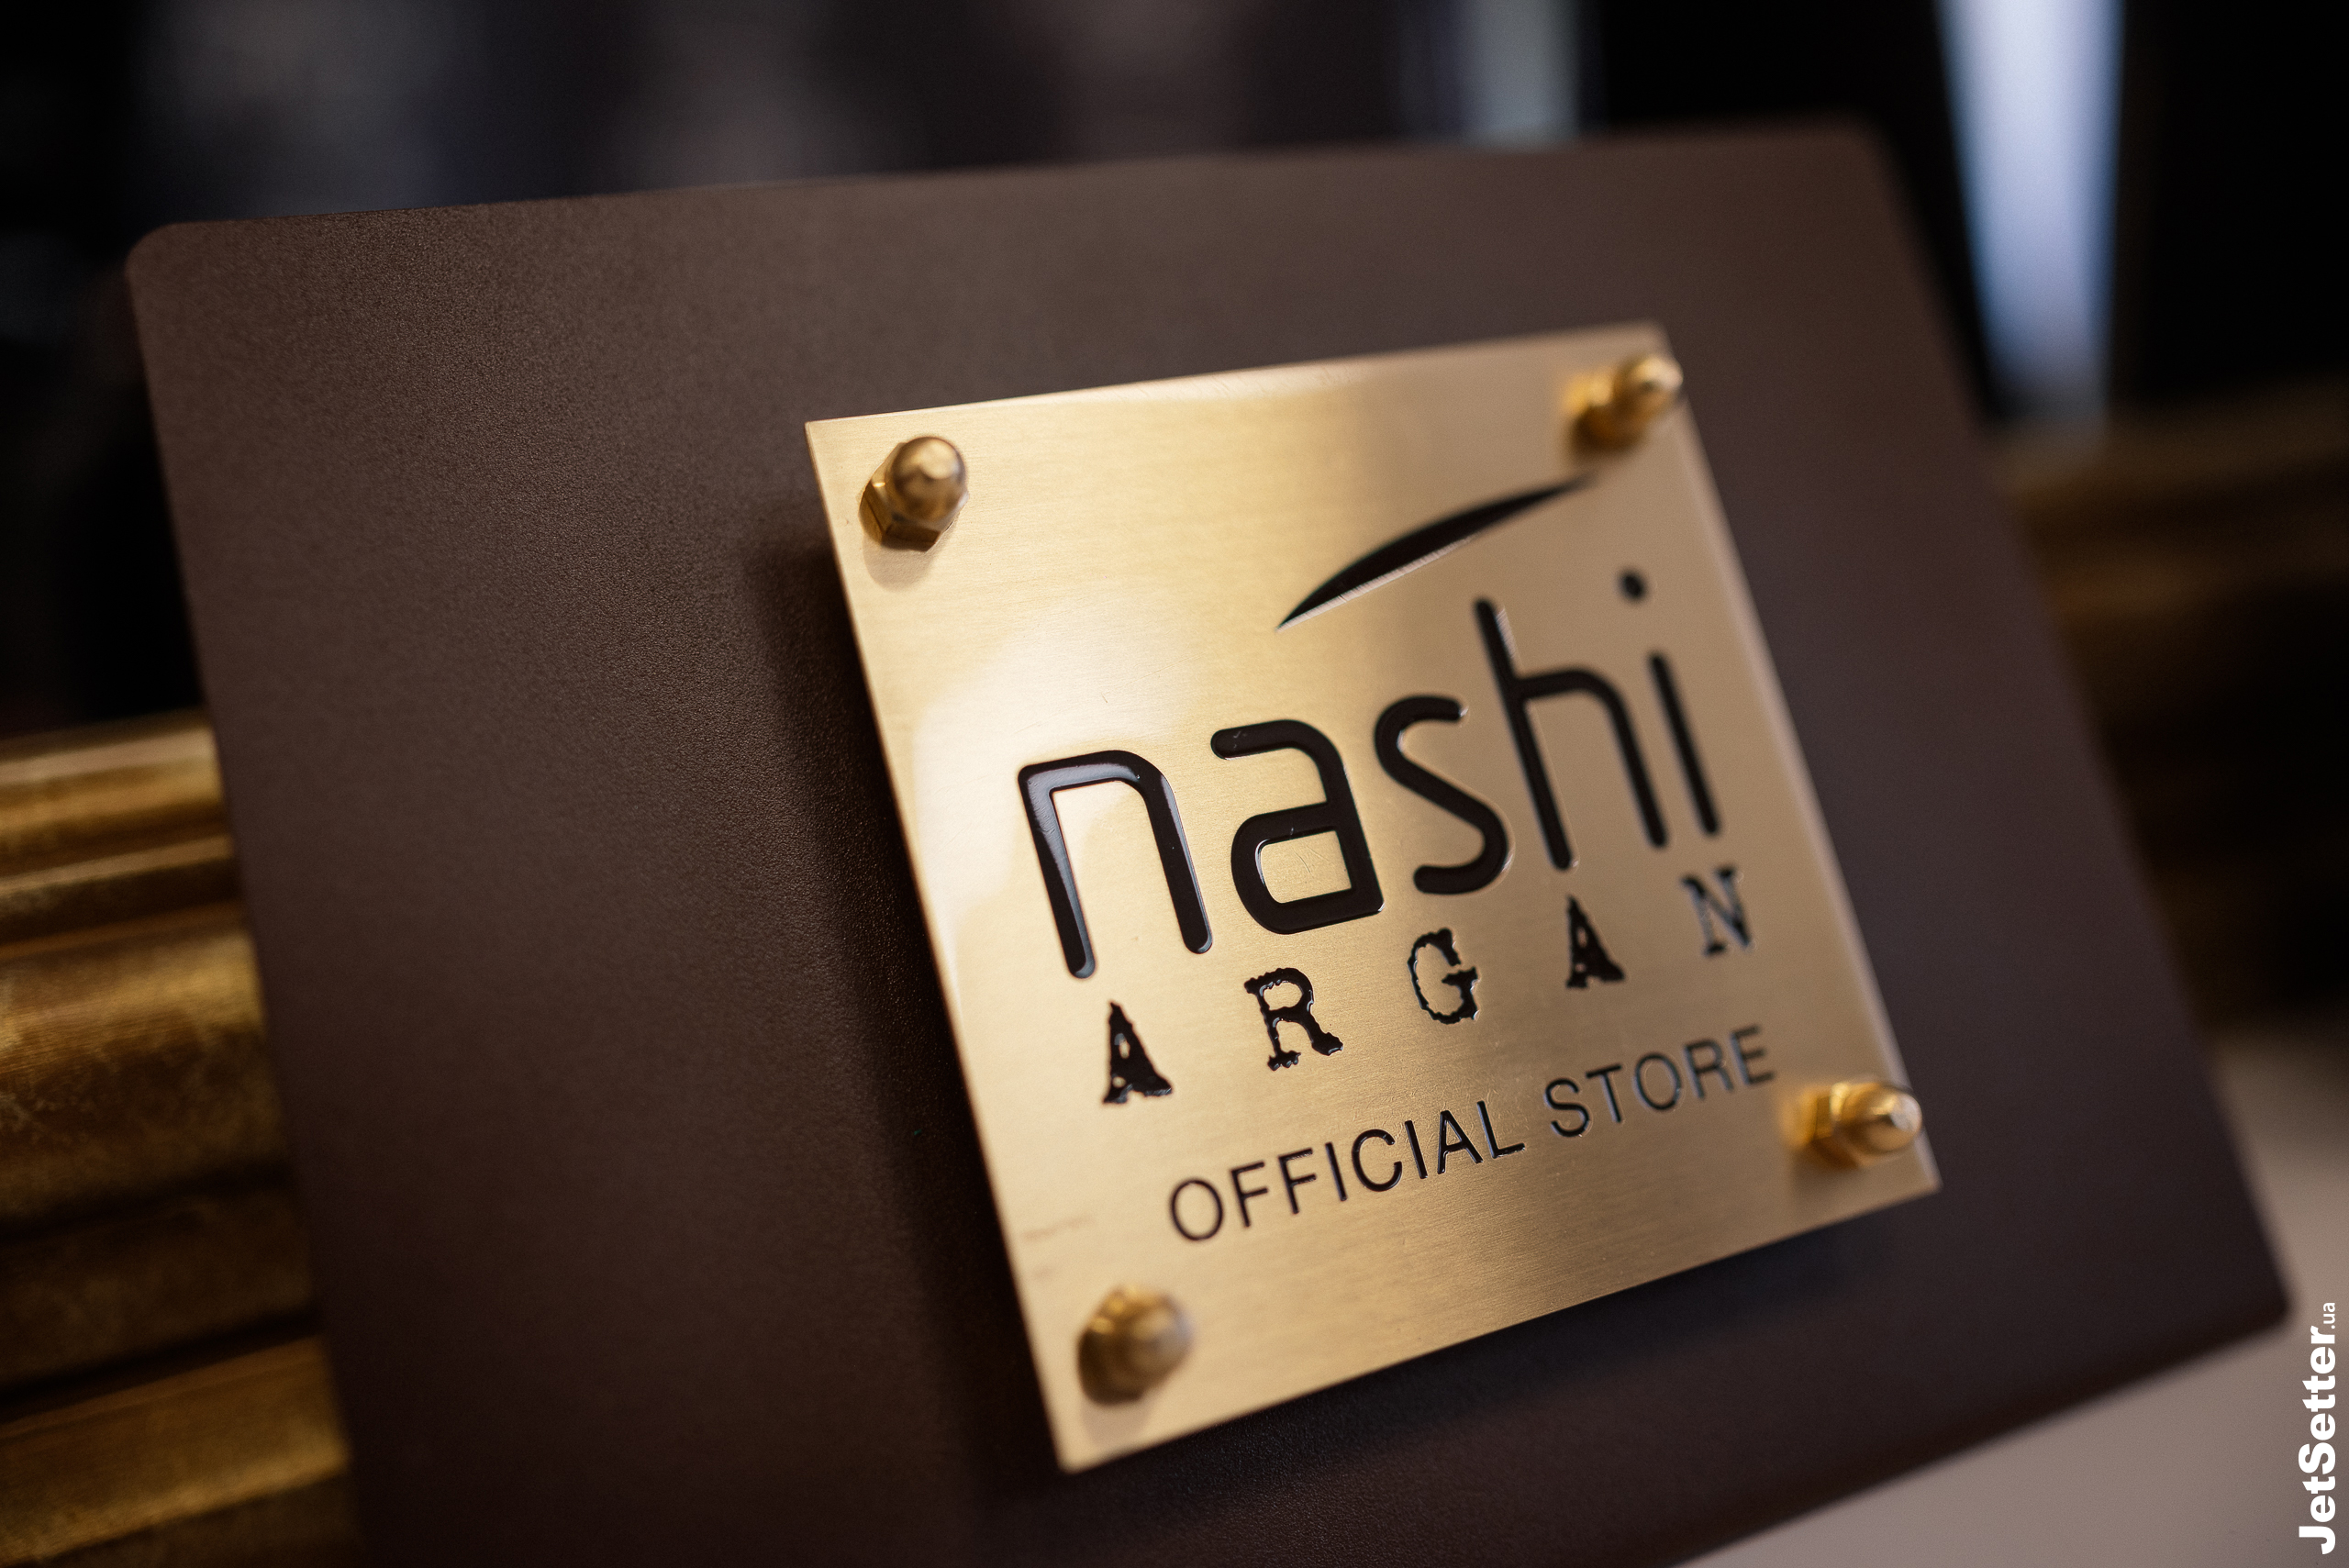 Відкриття Nashi Argan Official Store у Salon Del Mar